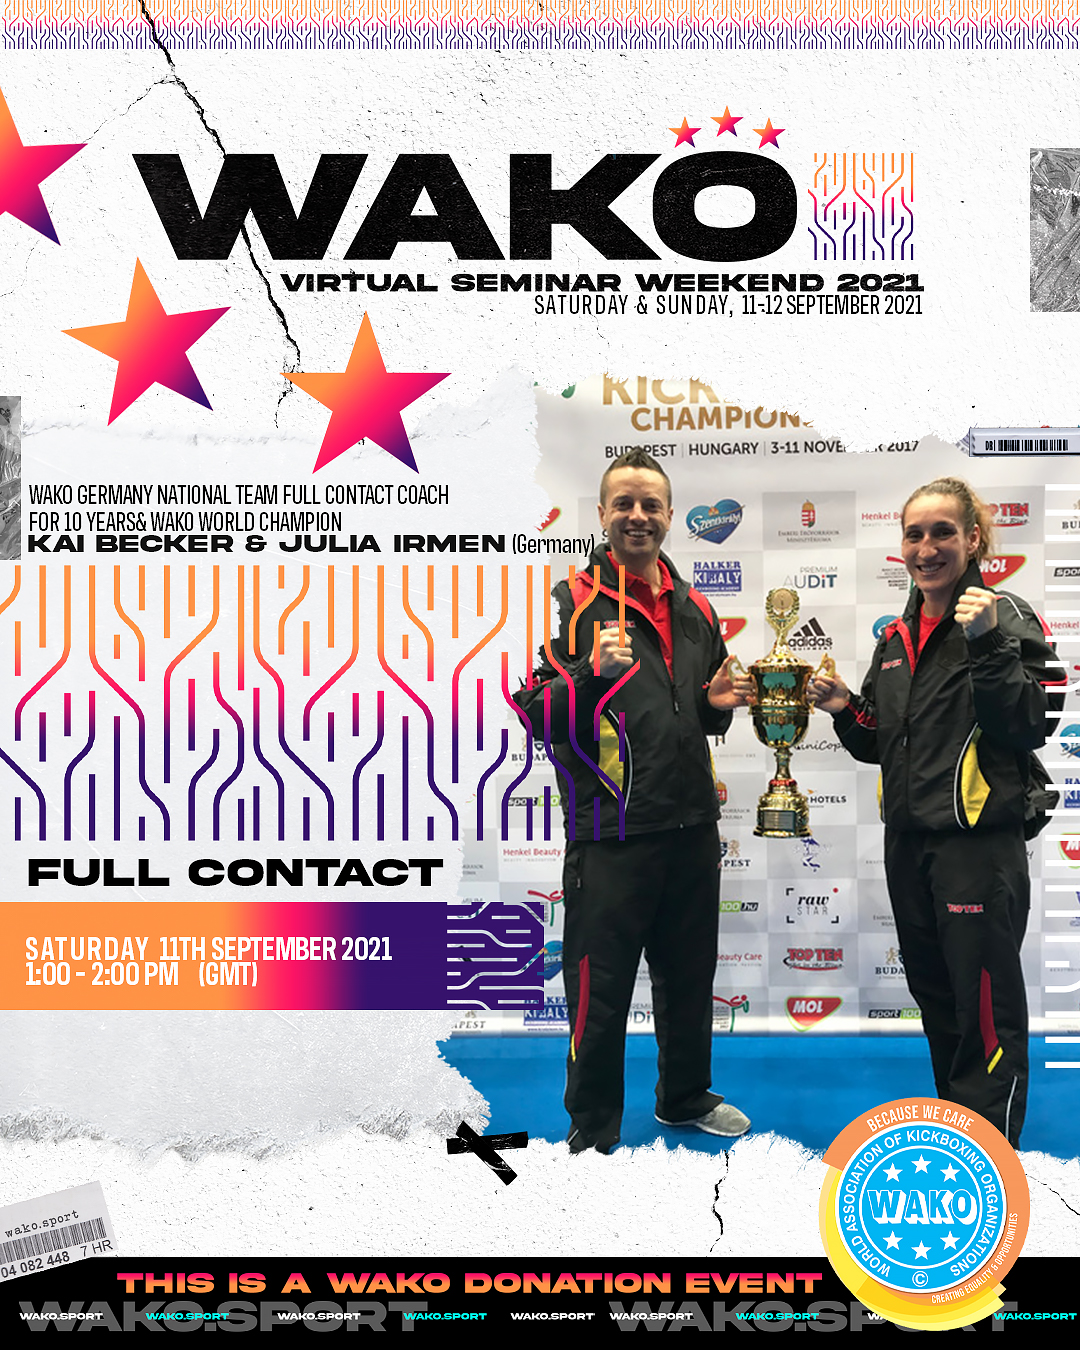 WAKO Virtual Seminar Weekend 2021 - 11 September 1-2 pm GMT - FULL CONTACT - Kai Becker & Julia Irmen (GER)